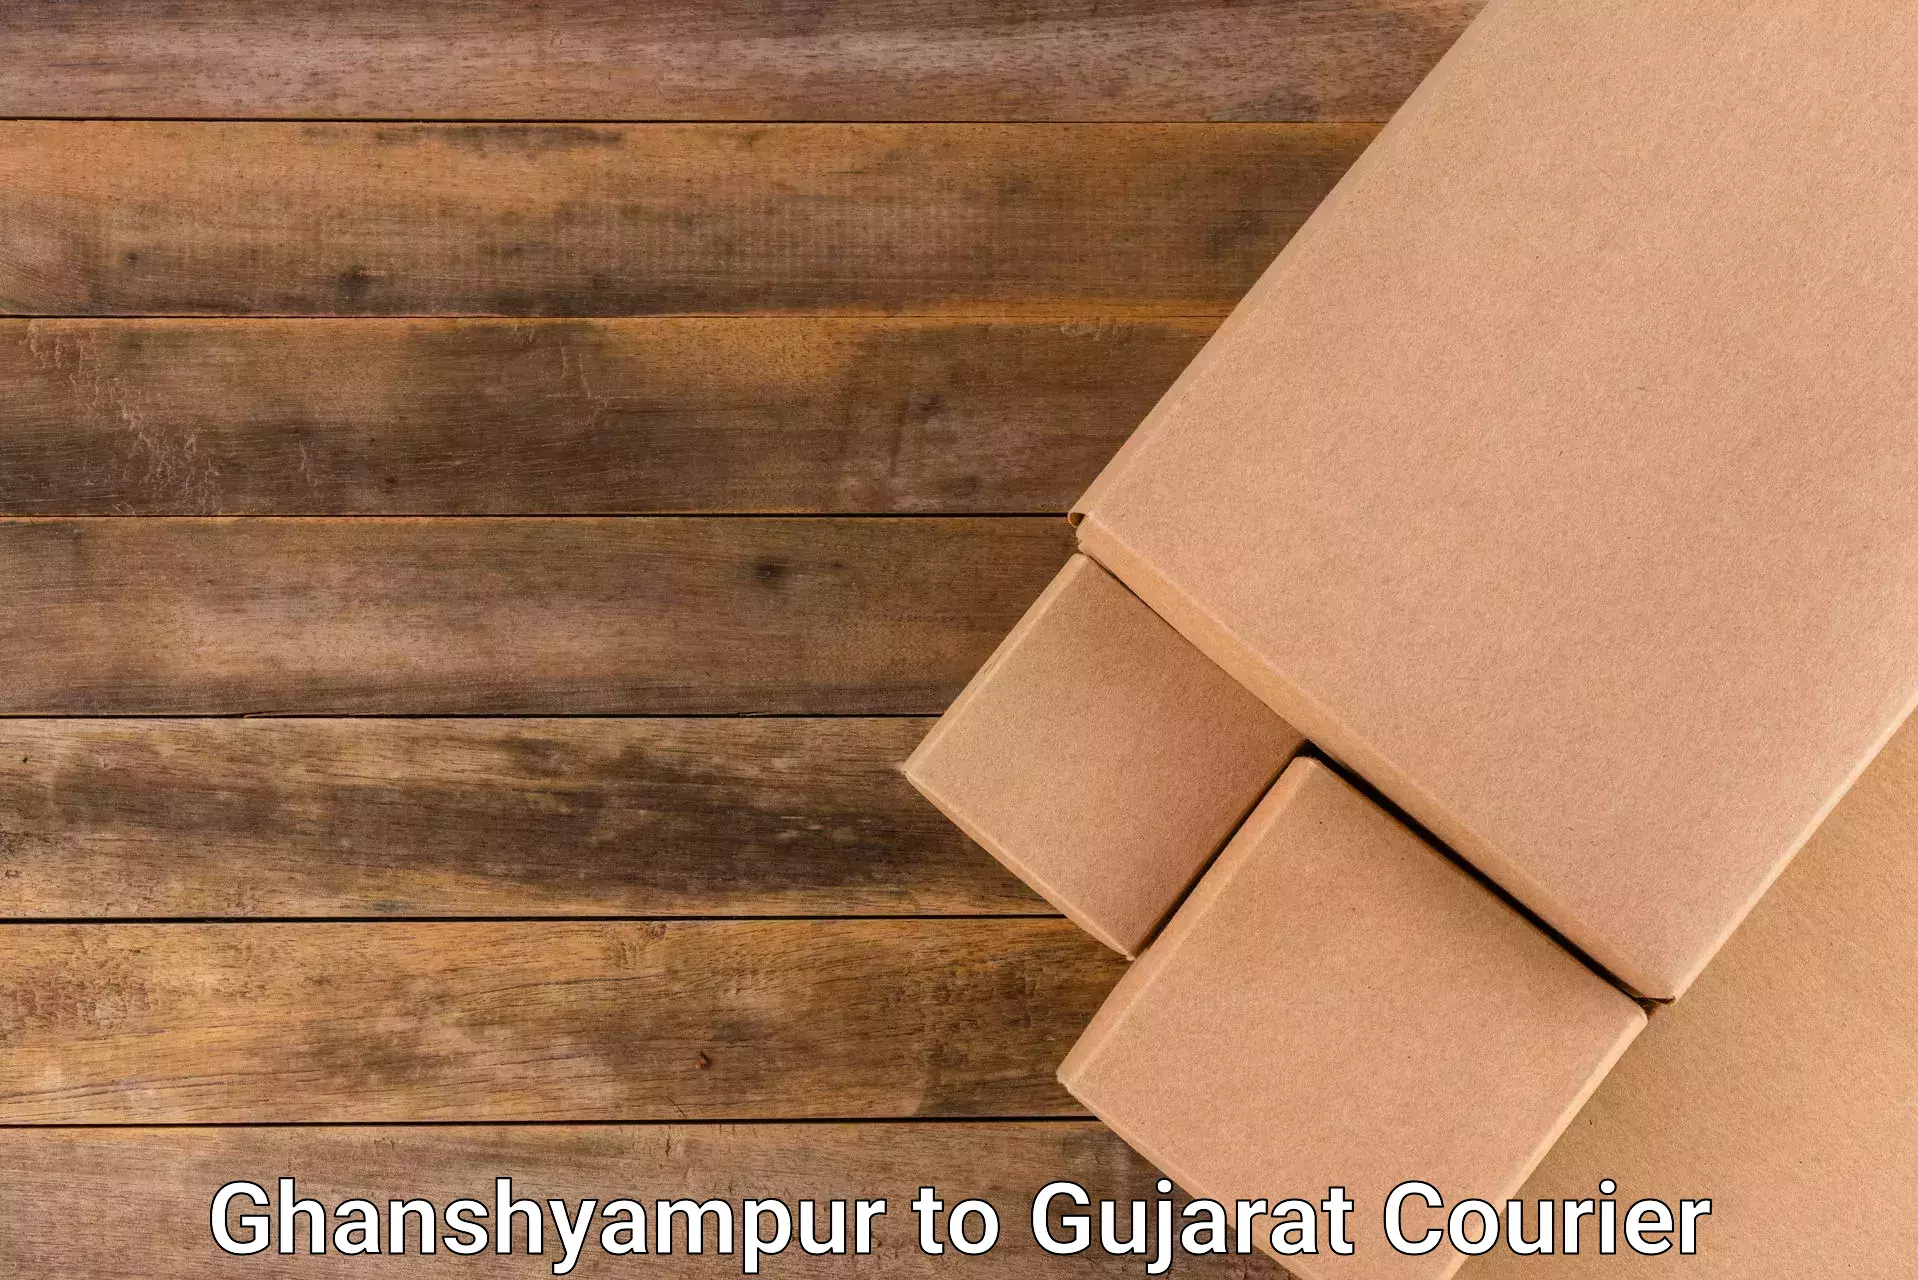 Urgent courier needs Ghanshyampur to Gujarat